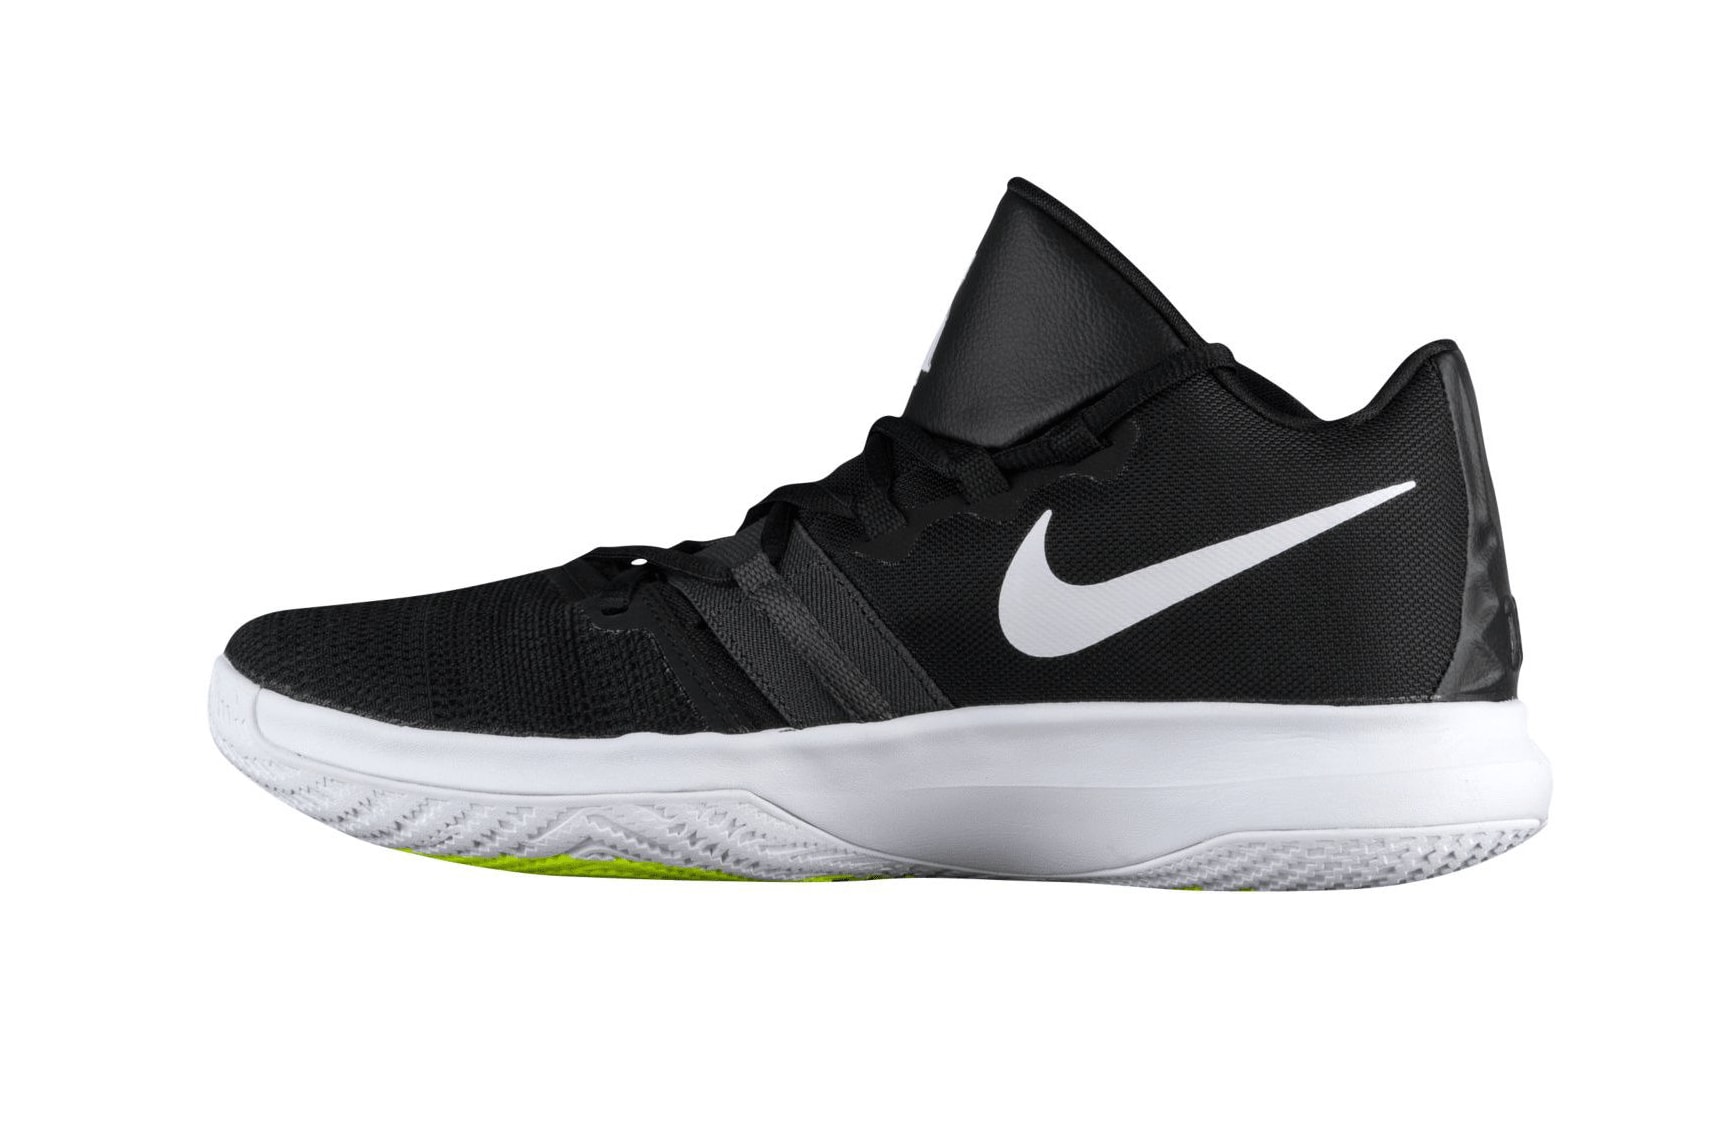 Nike Kyrie Flytrap black white volt footwear Kyrie Irving nike basketball boston celtics